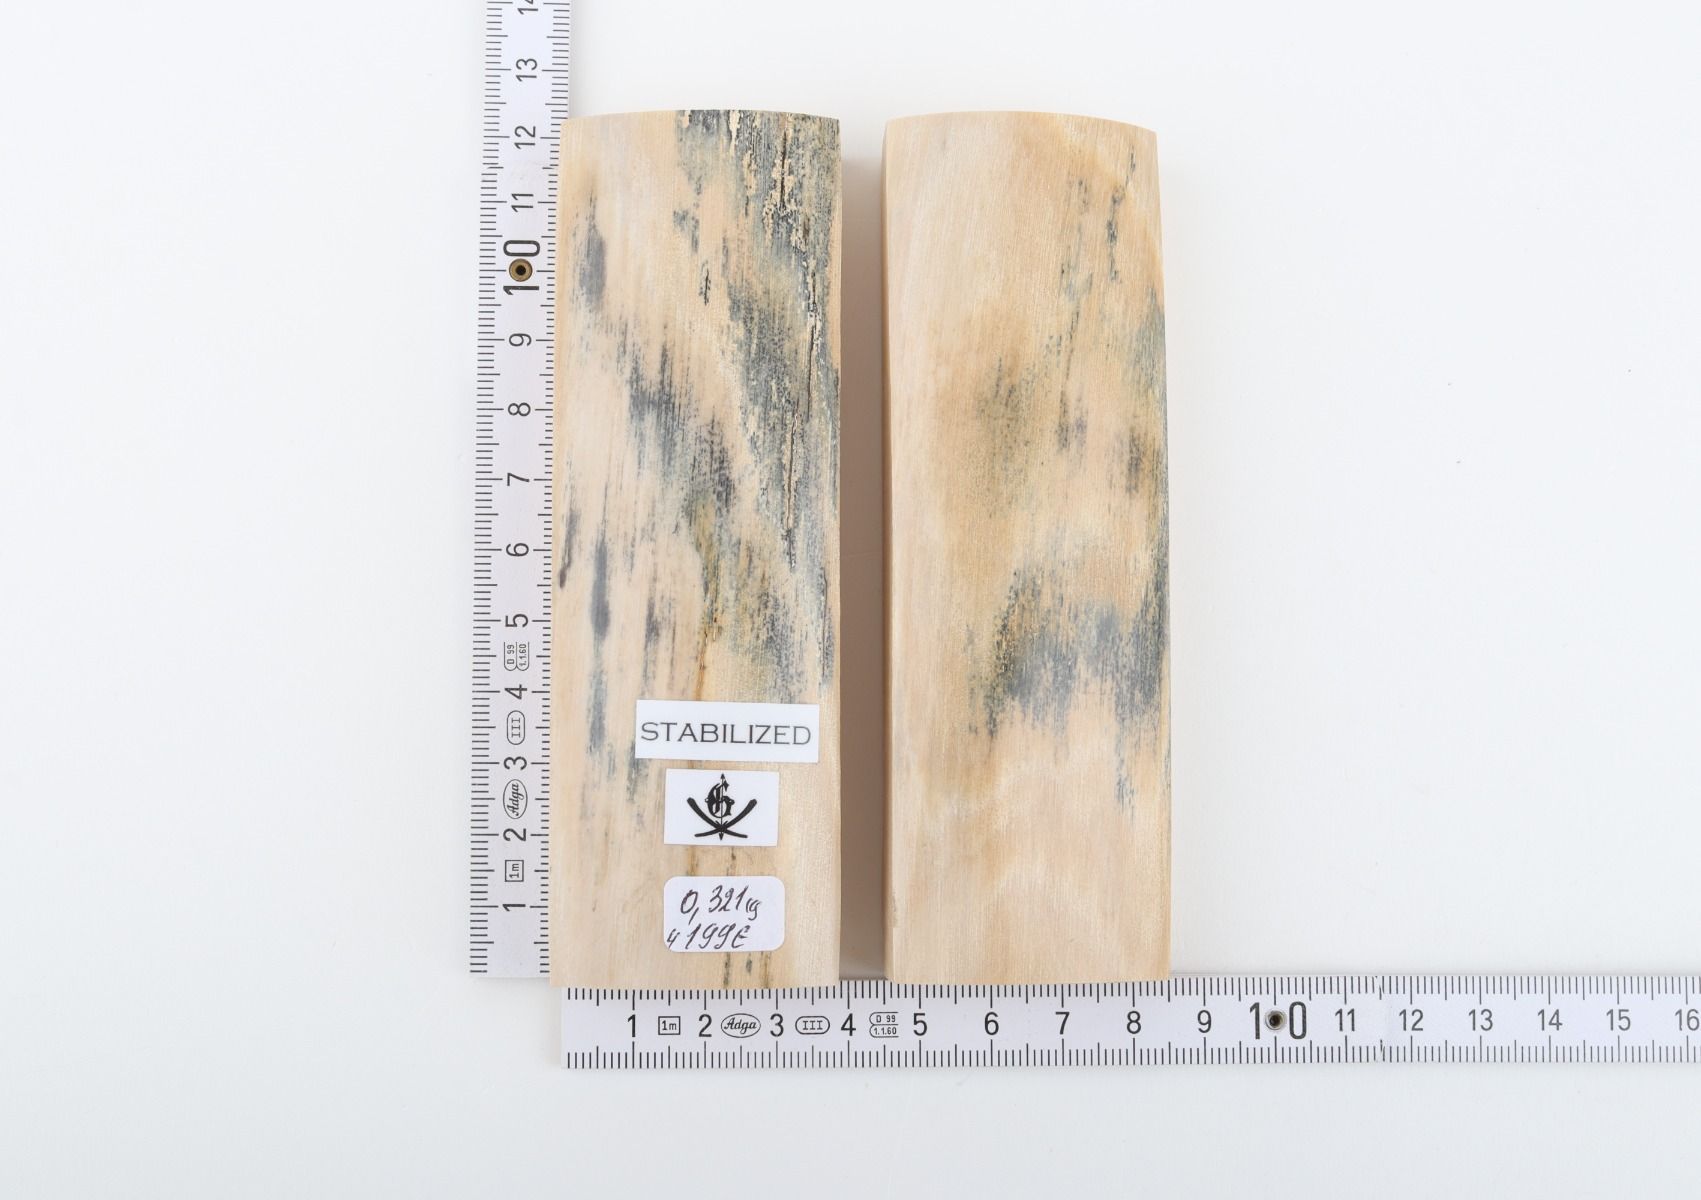 Stabilised mammoth bark scales